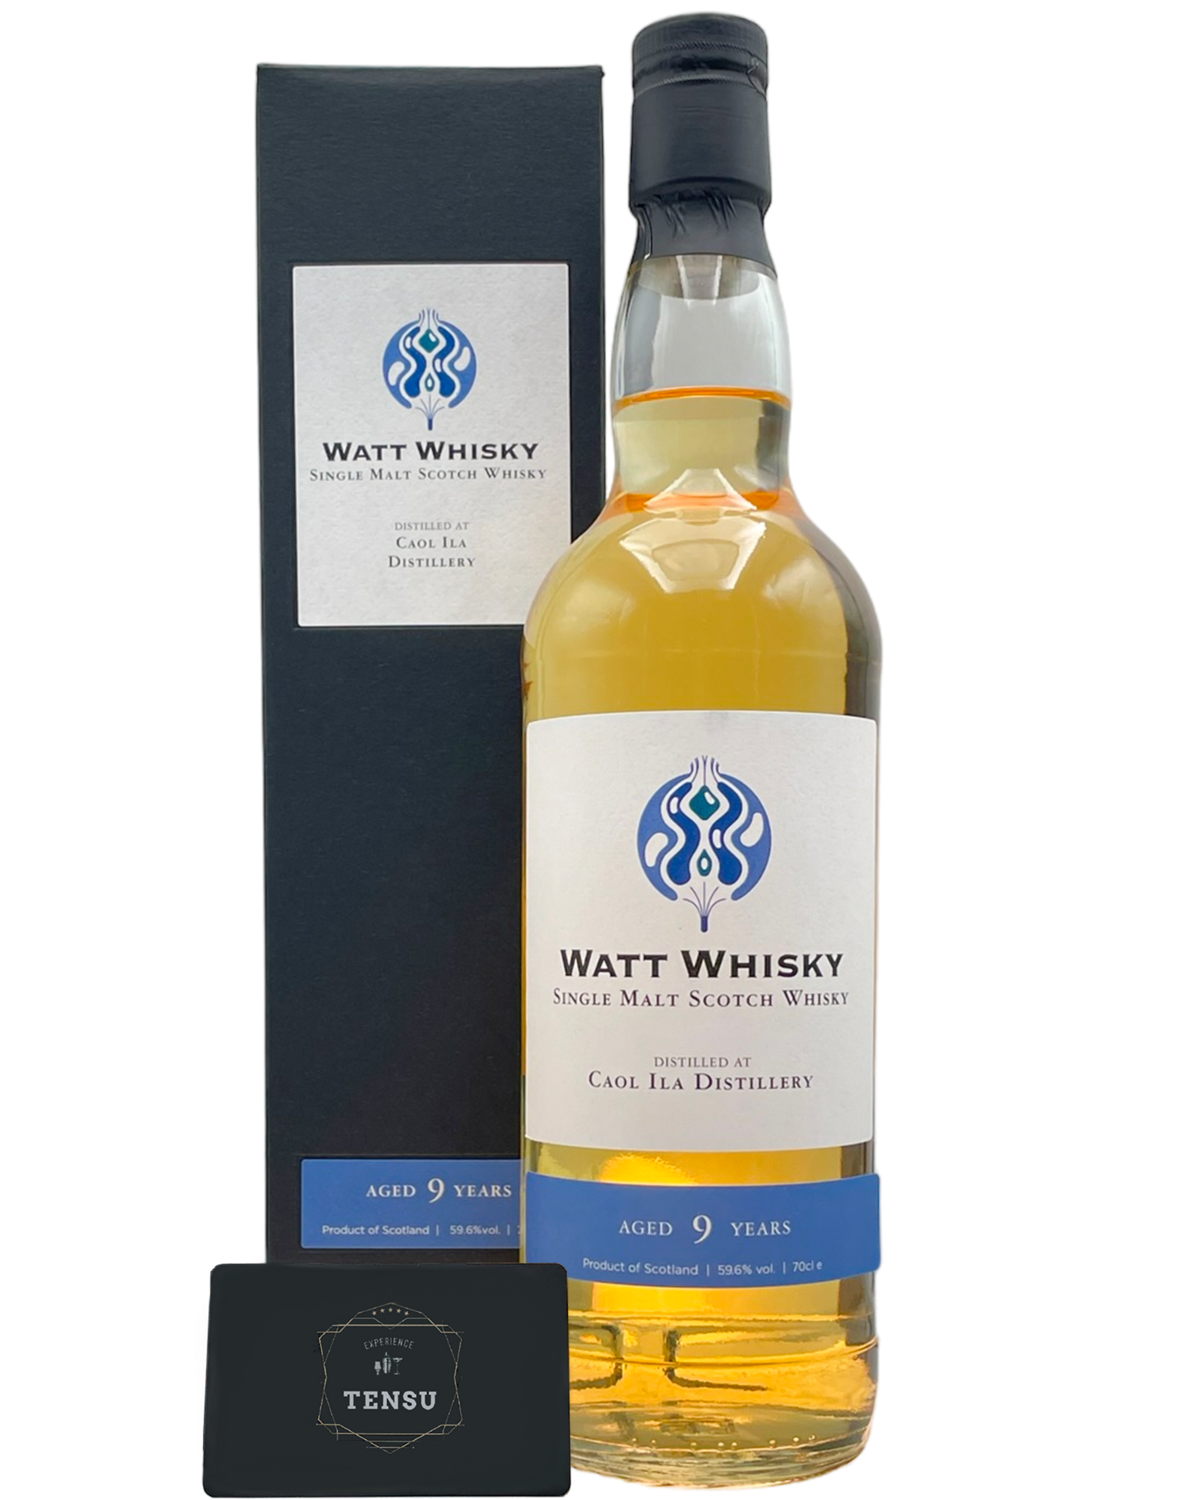 Caol Ila 9Y (2013-2023) SC 59.6 "Watt Whisky"